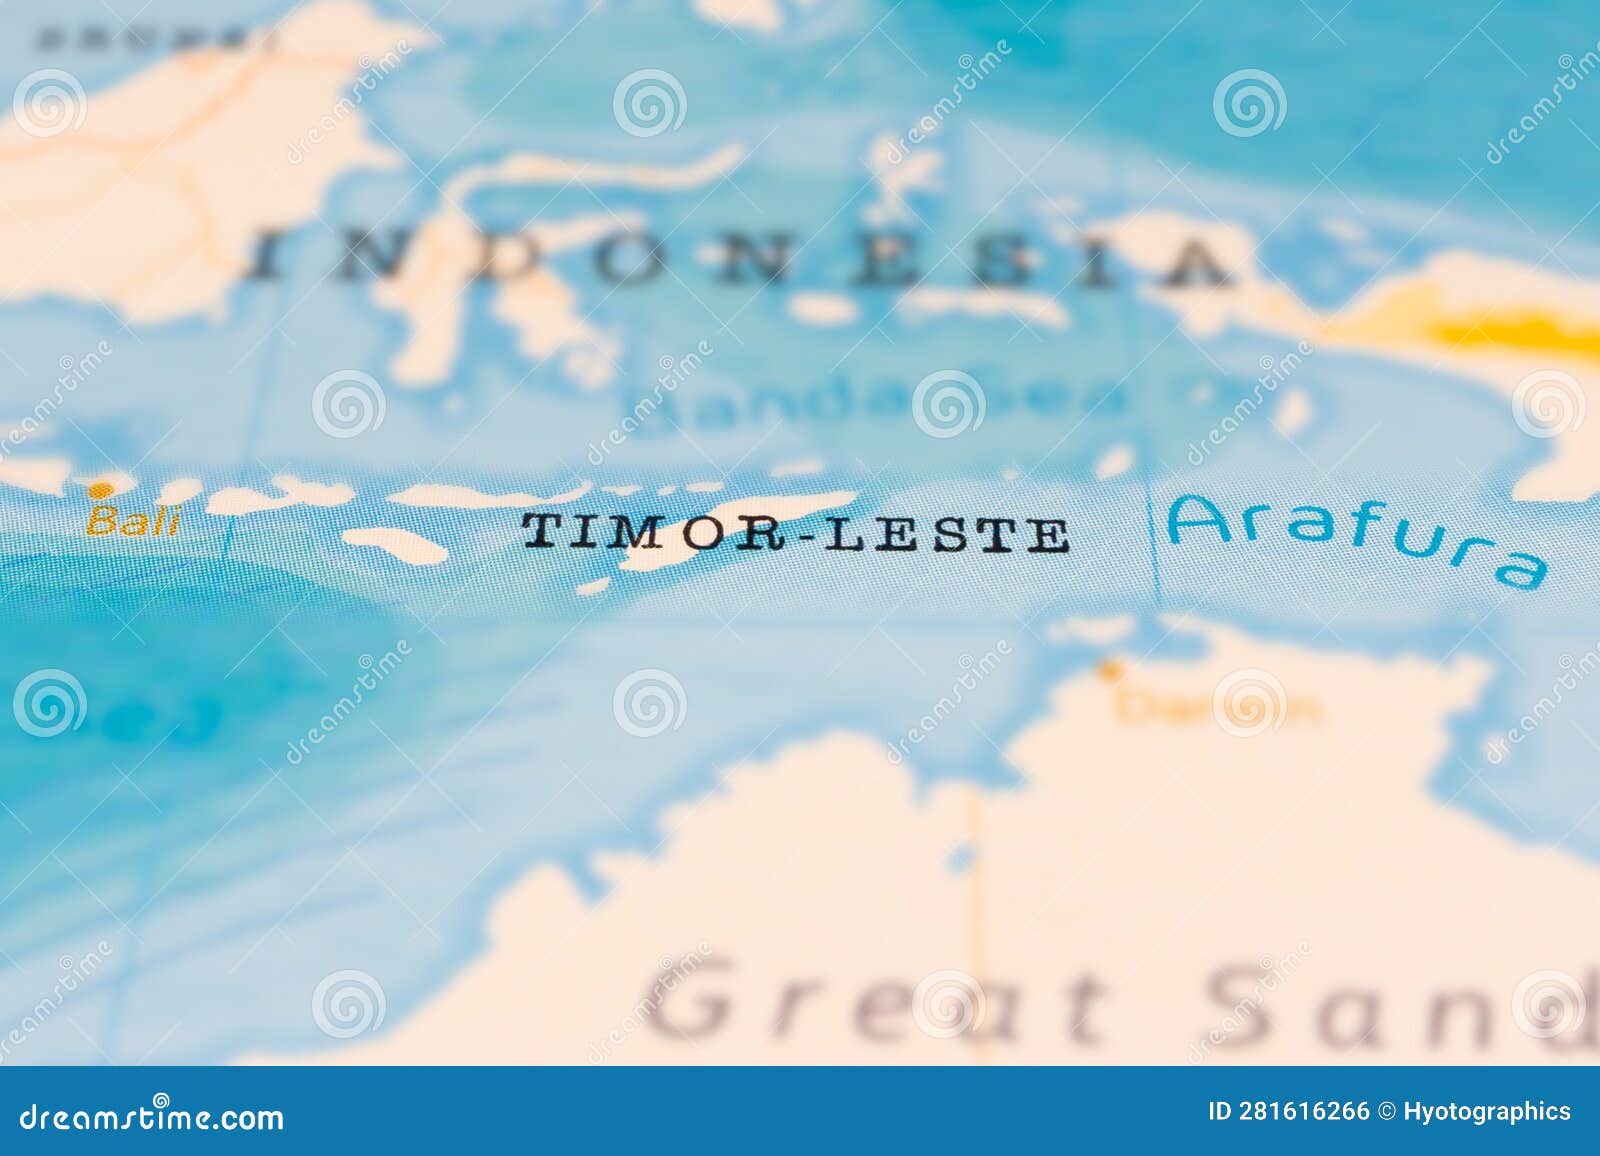 timor-leste in focus on a tilted world map.